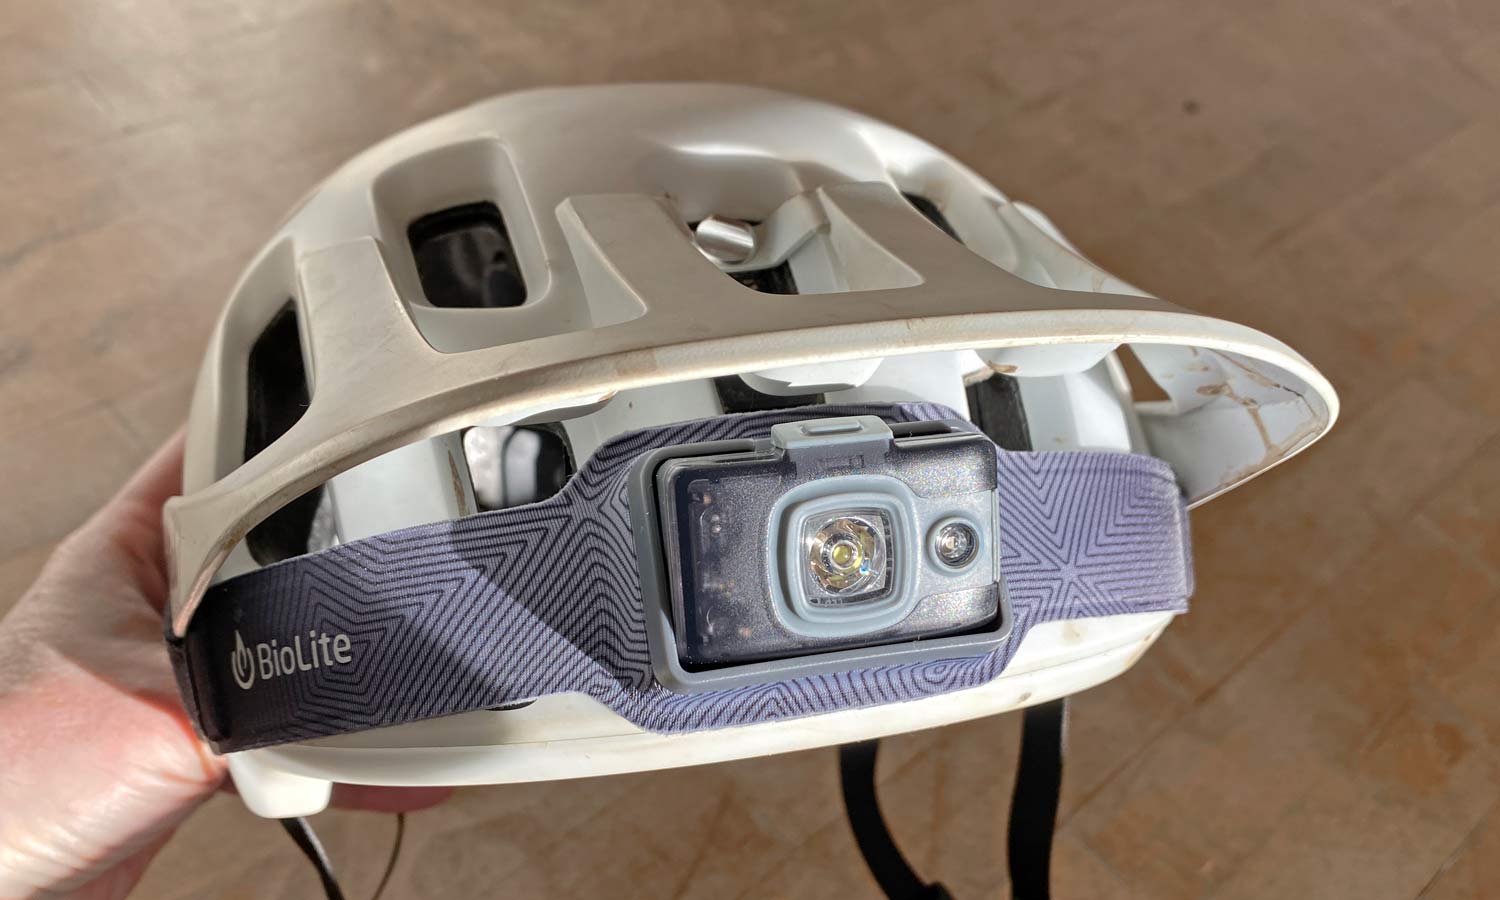 BioLite HeadLamp 200 light, compact rechargeable 200 lumen LED multi sport head light